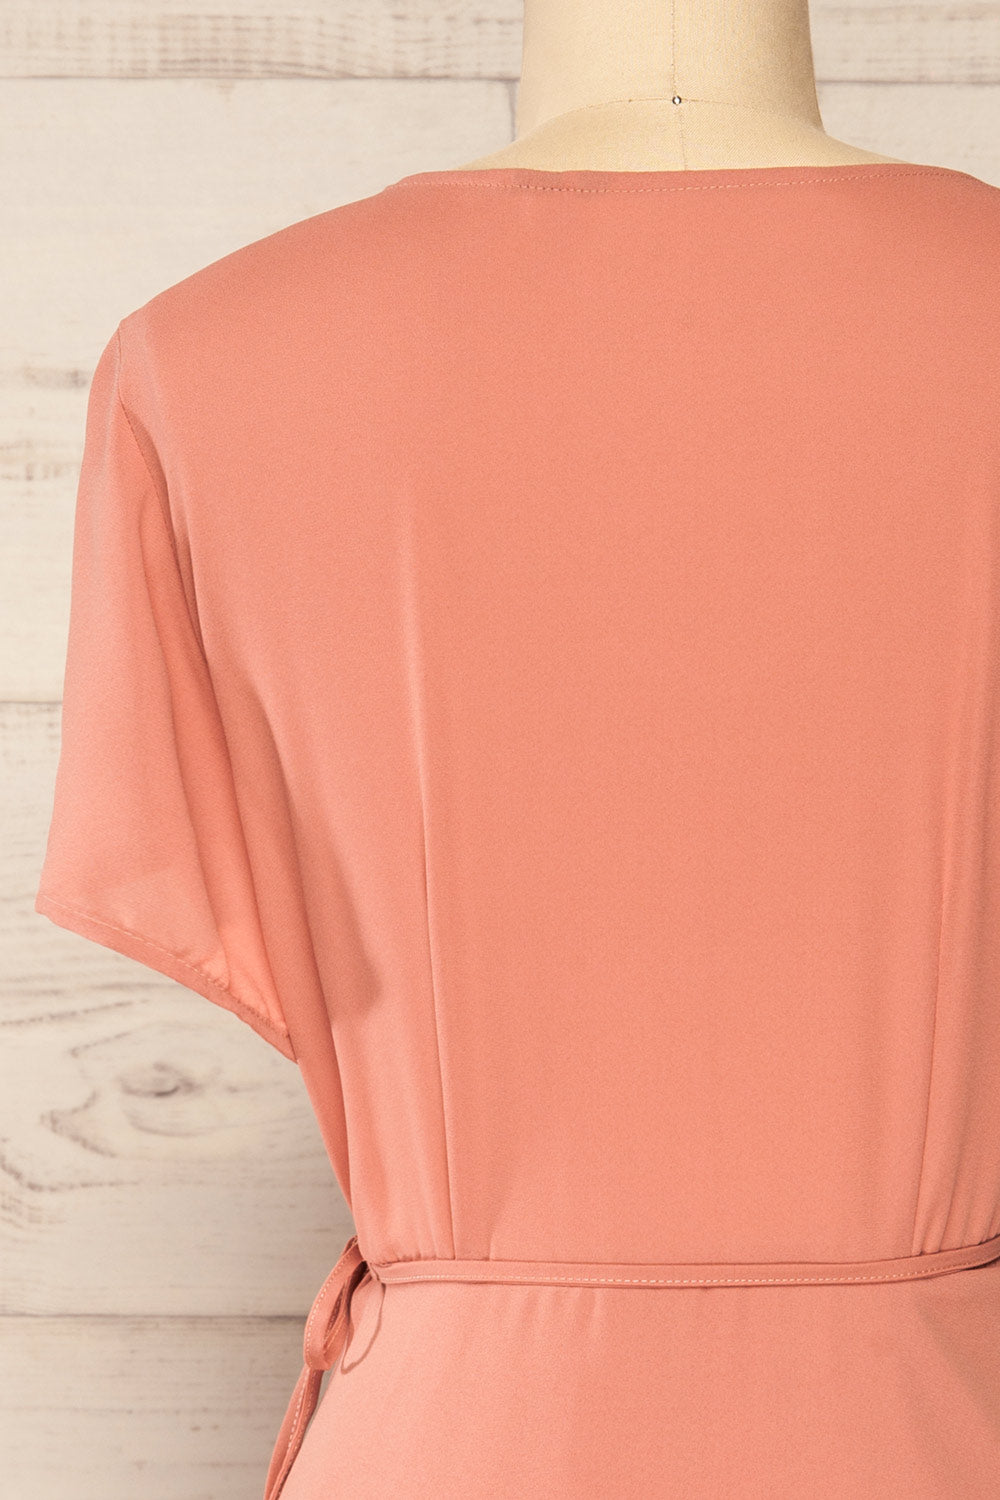 Jaurel Dusty Pink Short Sleeve Wrap Dress | La petite garçonne back close-up